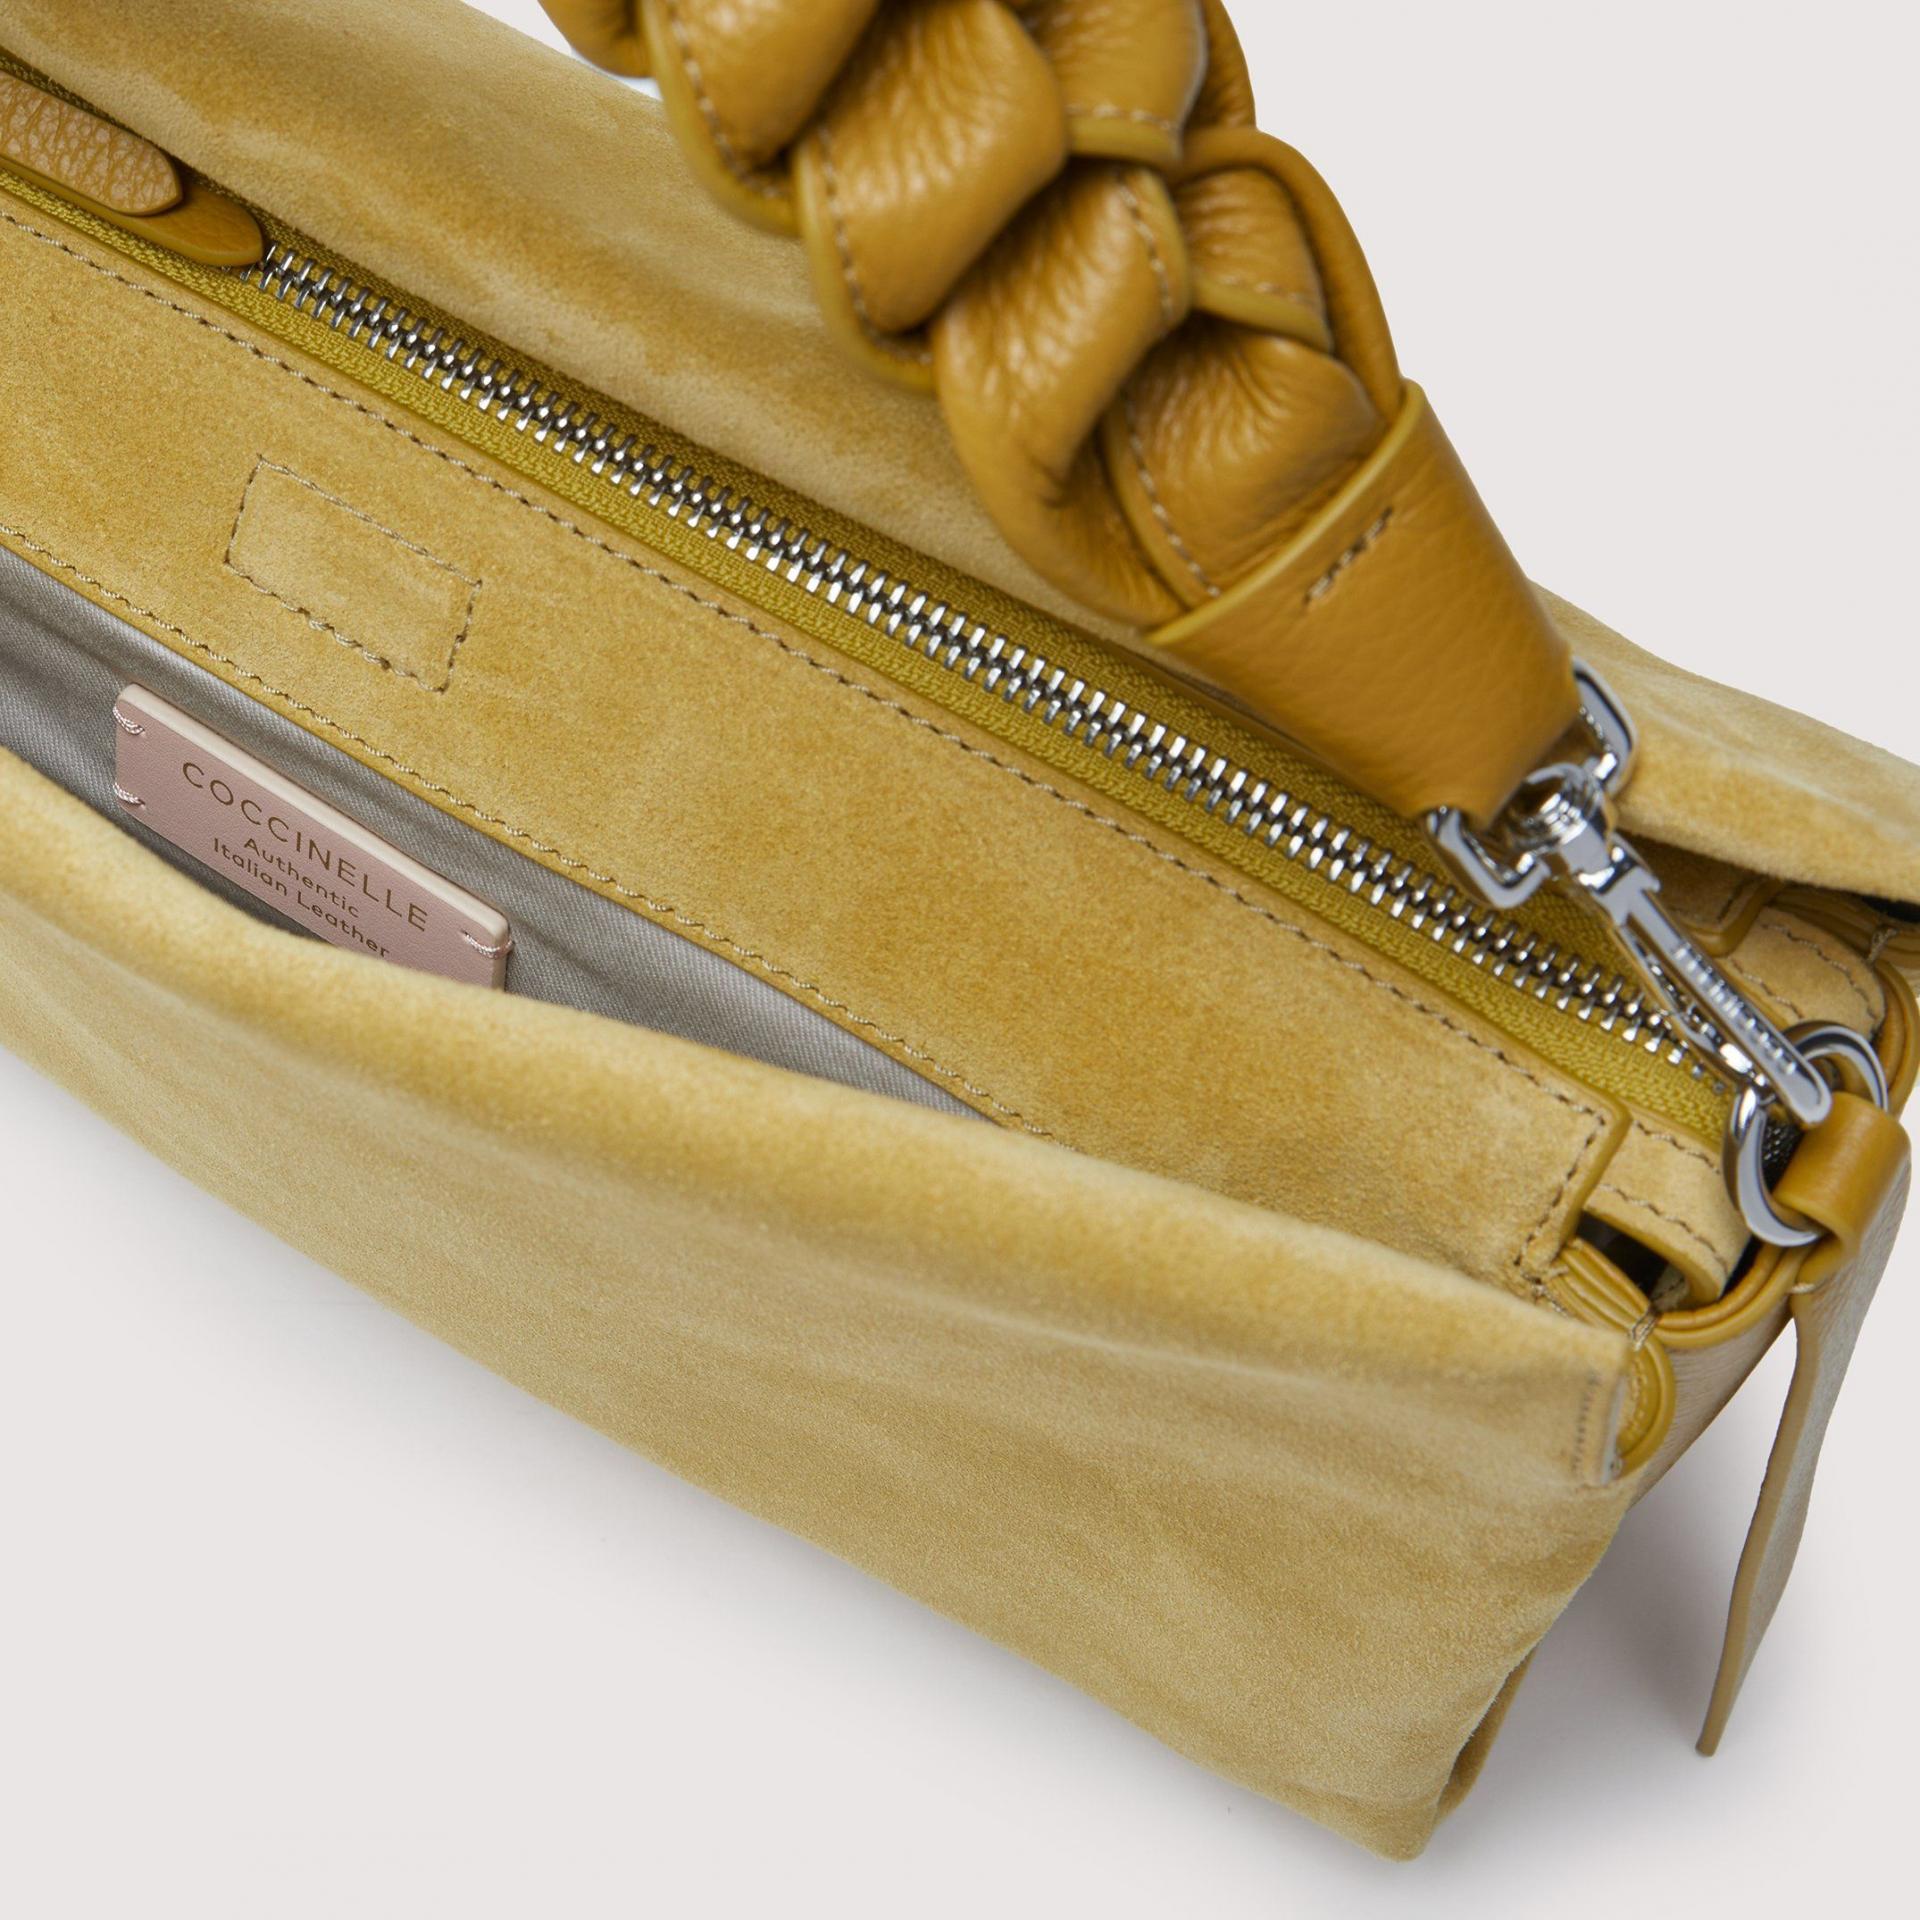 Coccinelle Bags BOHEME SUEDE BIMATERIAL Wildleder Handtasche - Variante: KALE GR KALE GR